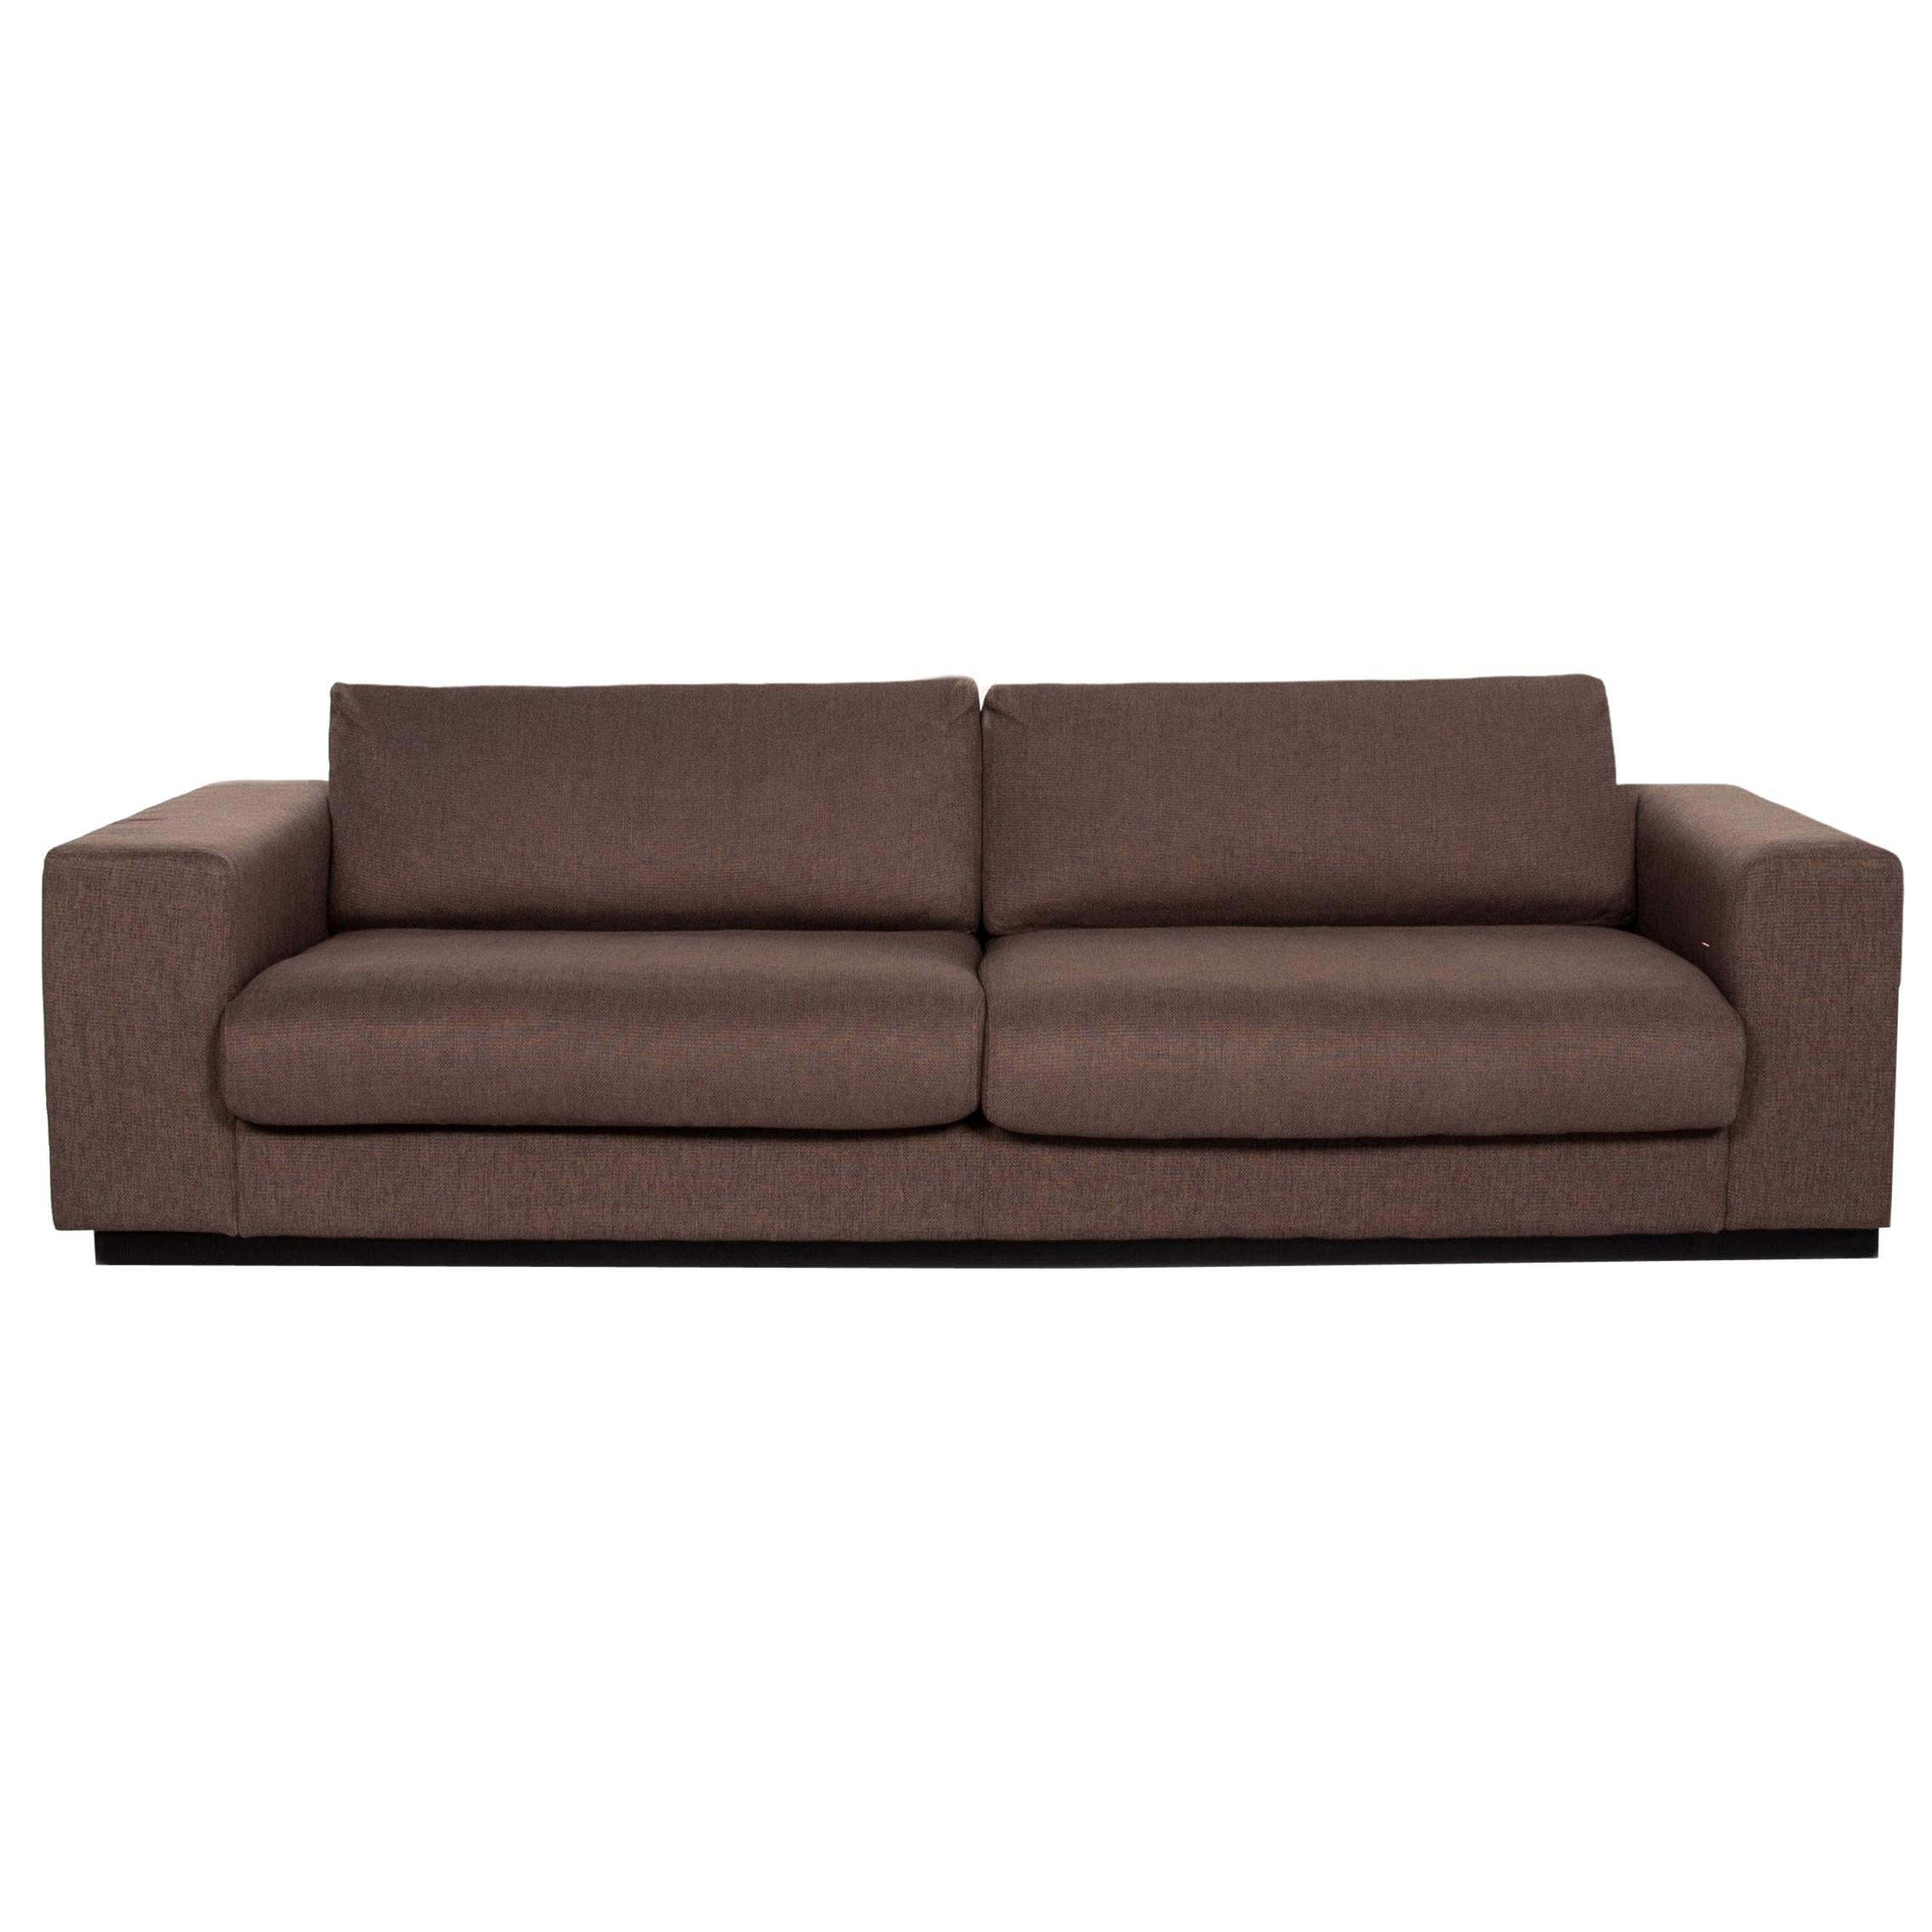 Bolia Sepia Fabric Sofa Brown Three-Seat Couch For Sale